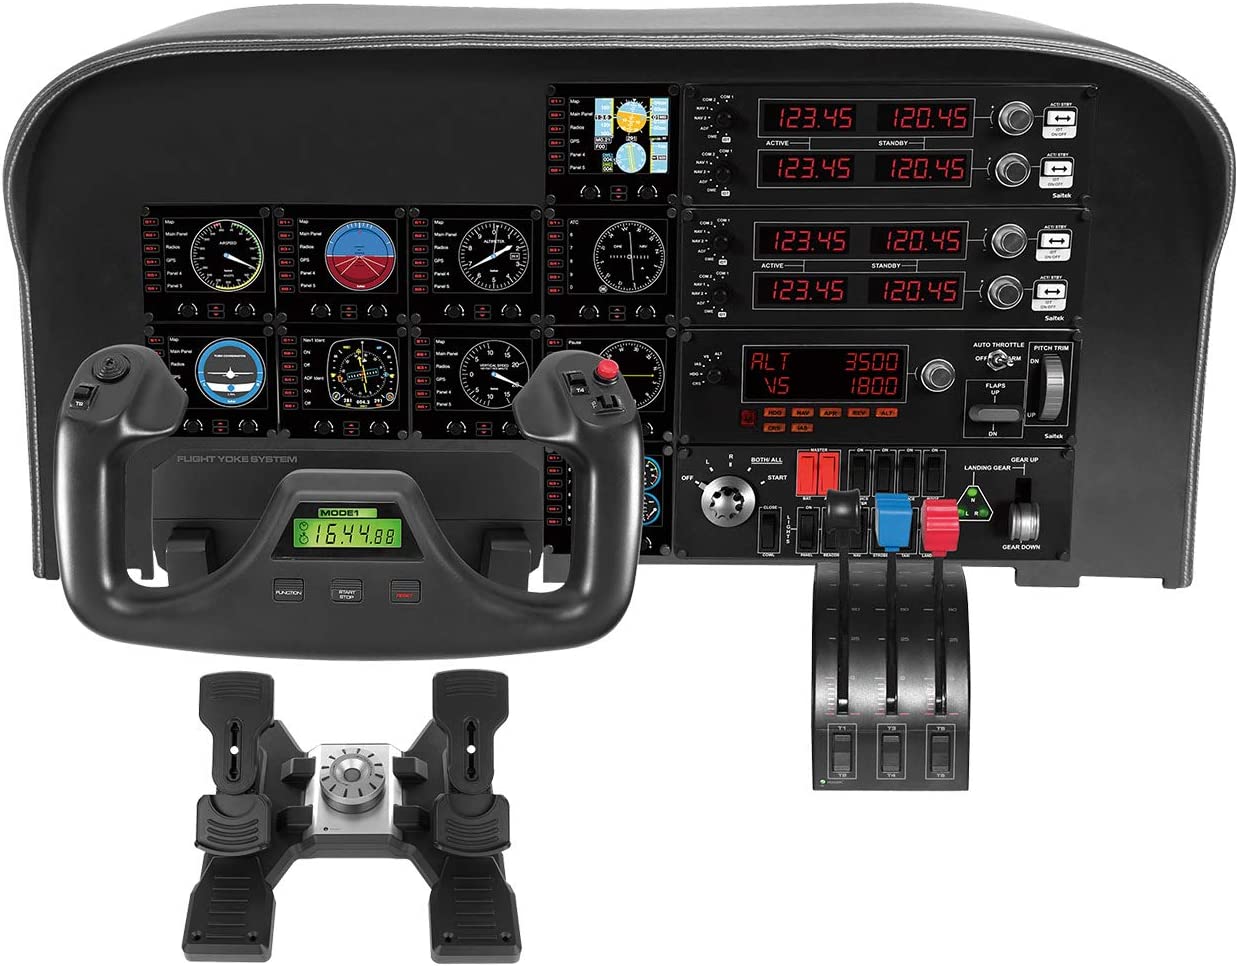 Logitech G Saitek Pro Flight Switch Panel de Conmutadores para Simulación de Vuelo, Cinco Posiciones de Control Giratorio de Magneto